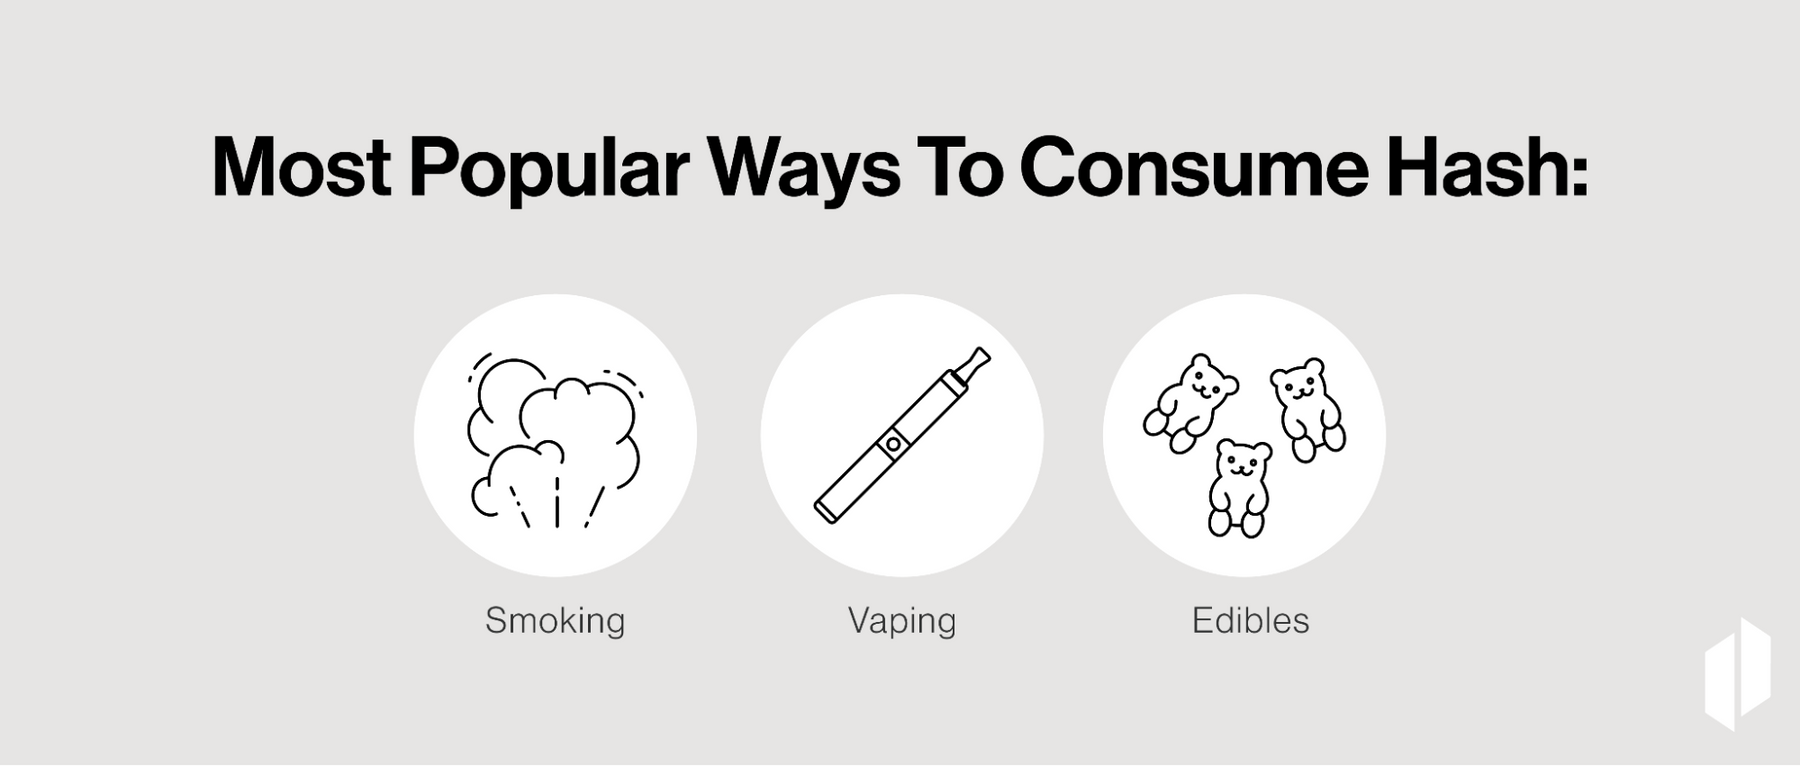 Most popular ways to consume hash: smoking, vaping, edibles